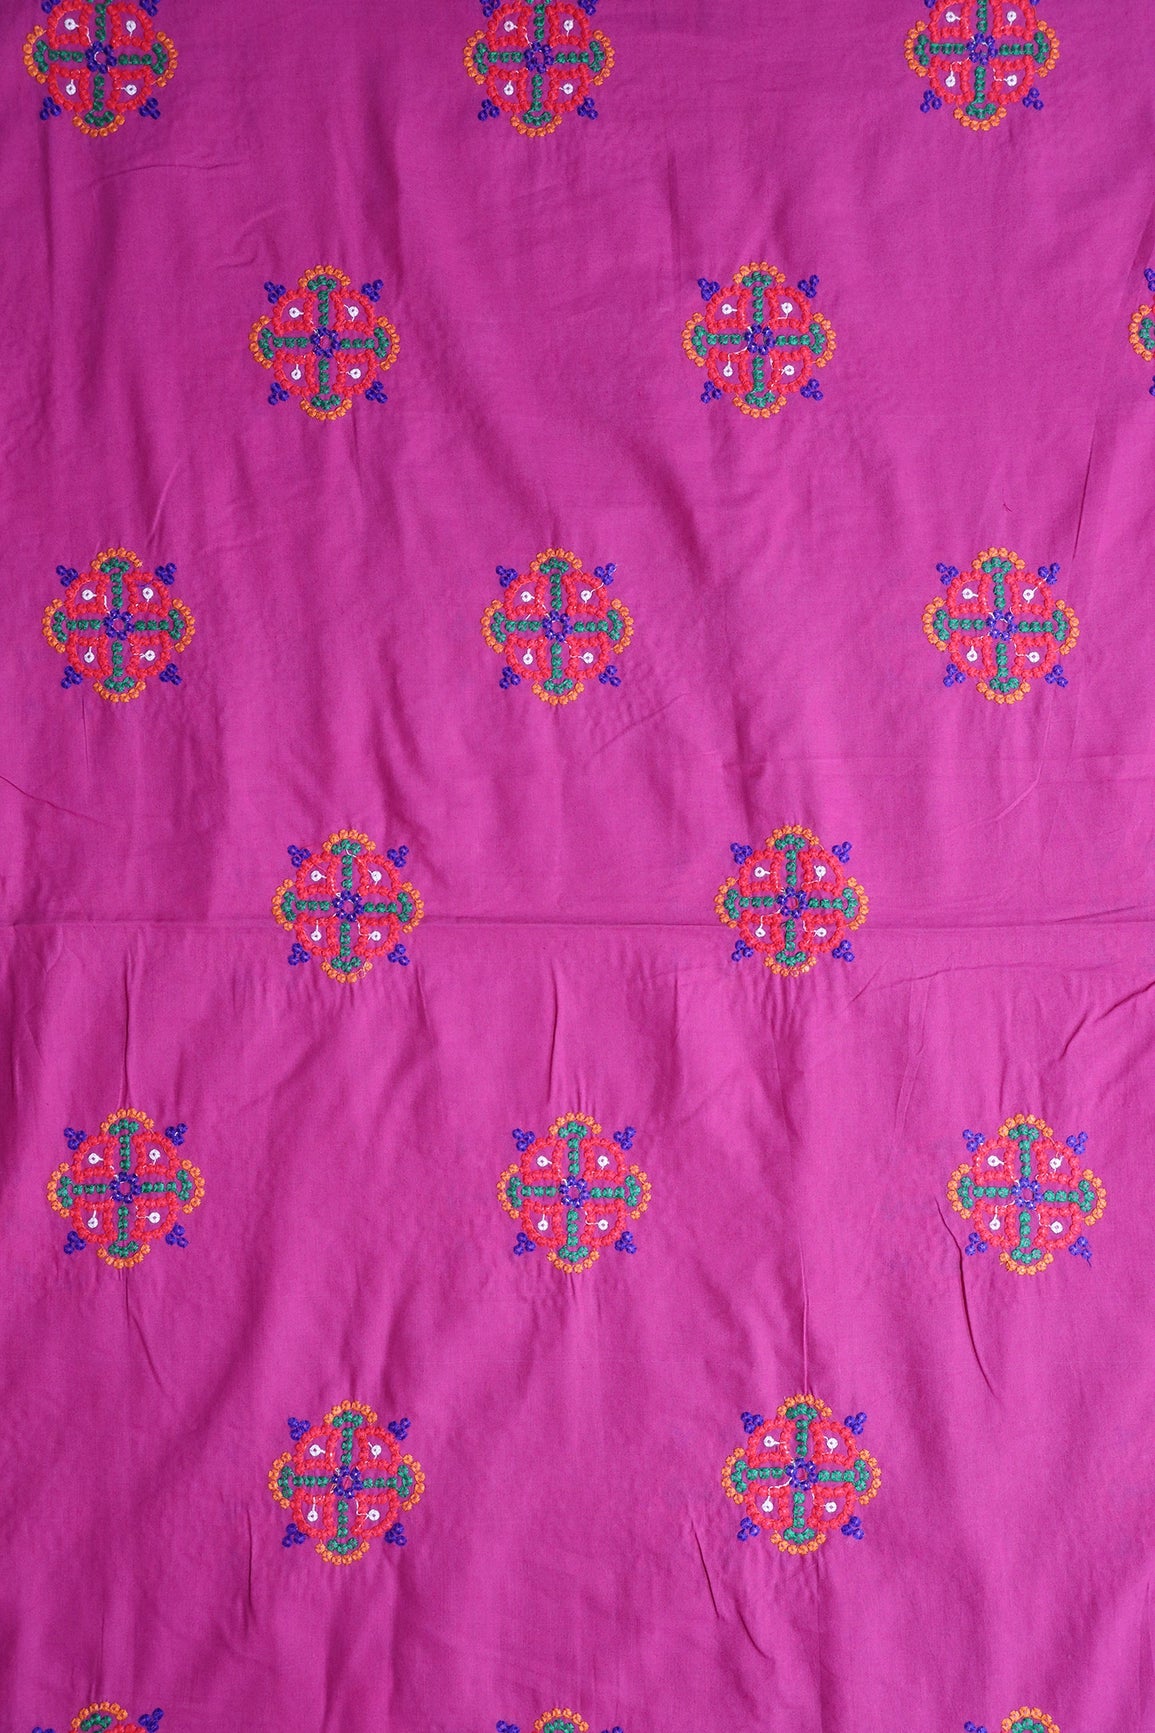 Multi Thread Floral Embroidery On Fuchsia Cotton Fabric